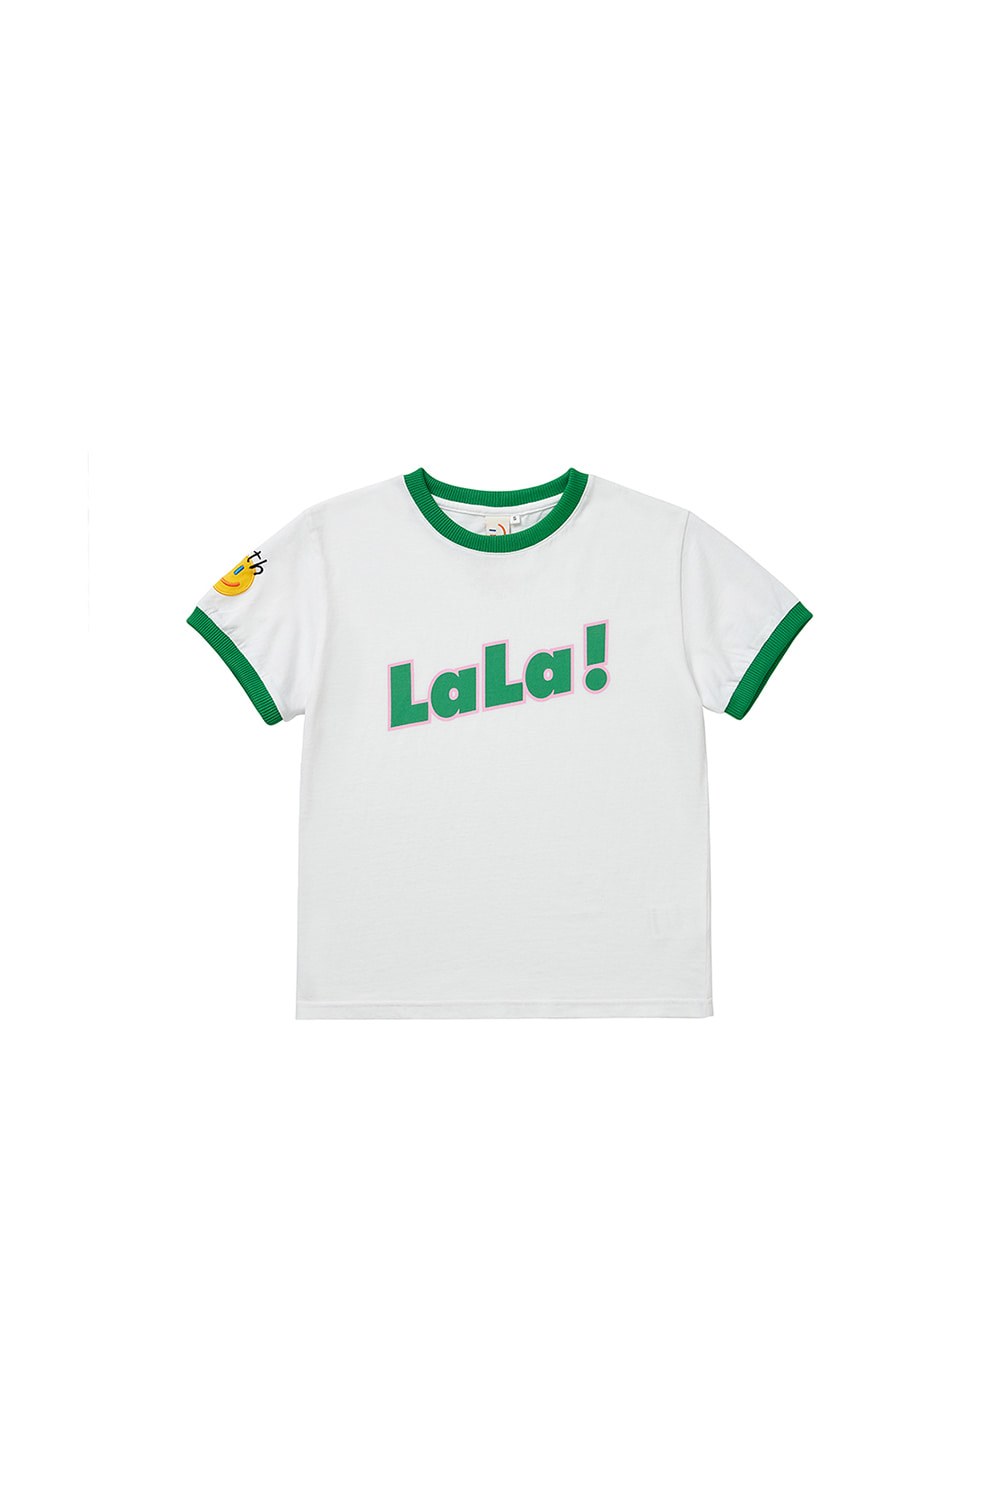 LaLa Twotone T-shirt [Green]